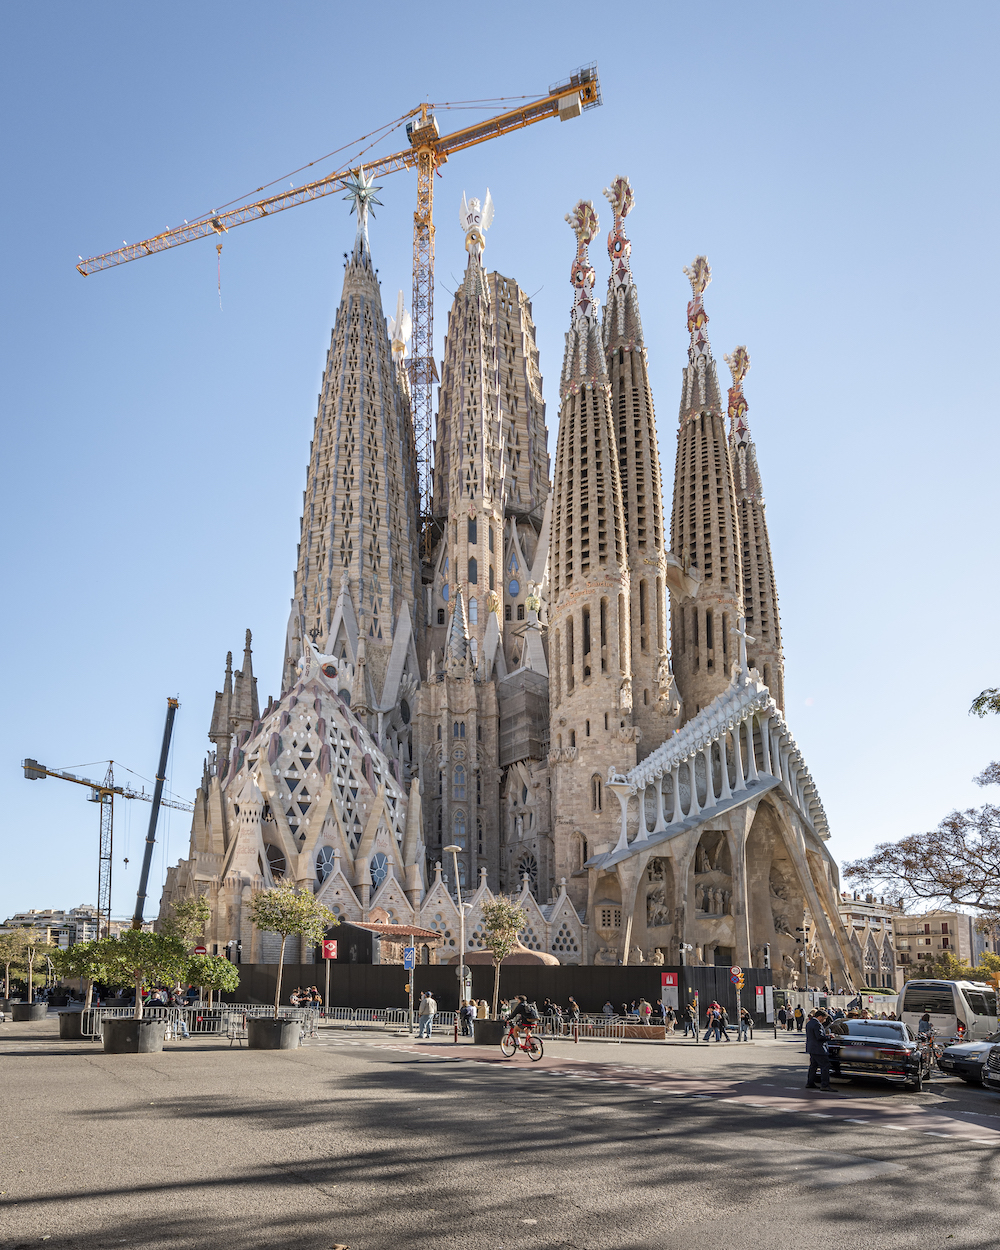 Exterior perspective of the Sagrada Familia